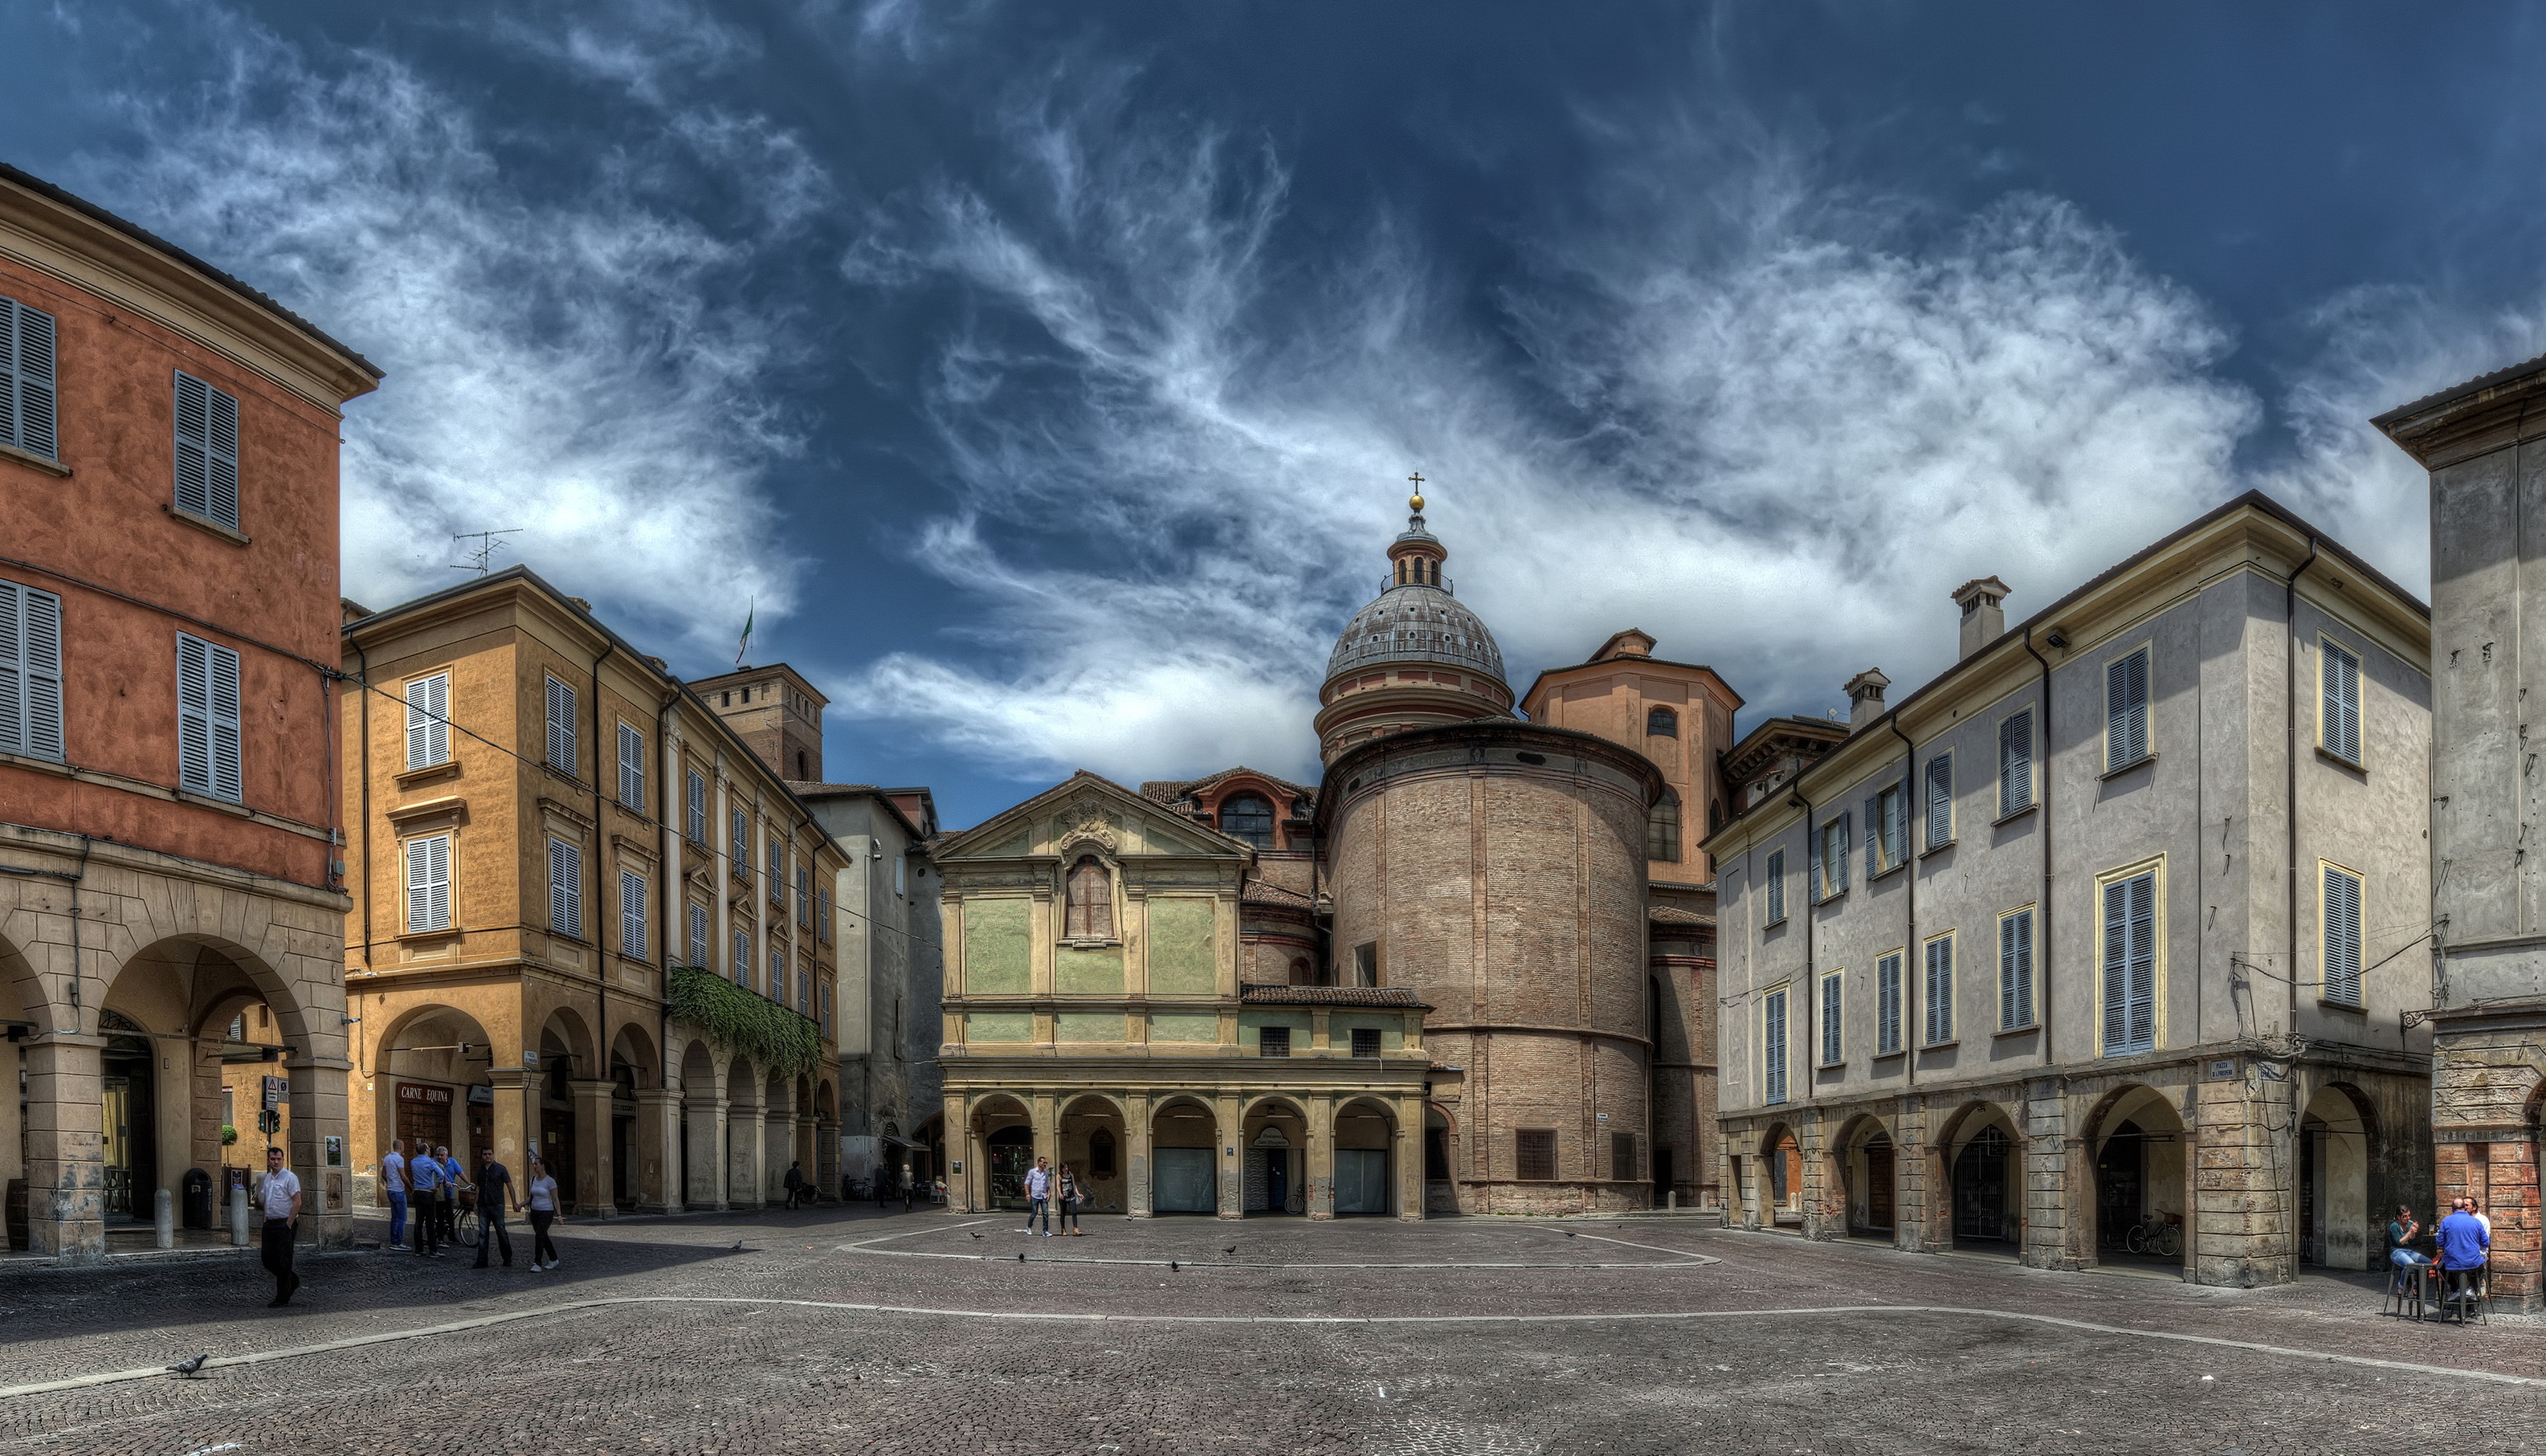 photo: https://upload.wikimedia.org/wikipedia/commons/d/d3/Piazza_San_Prospero.JPG